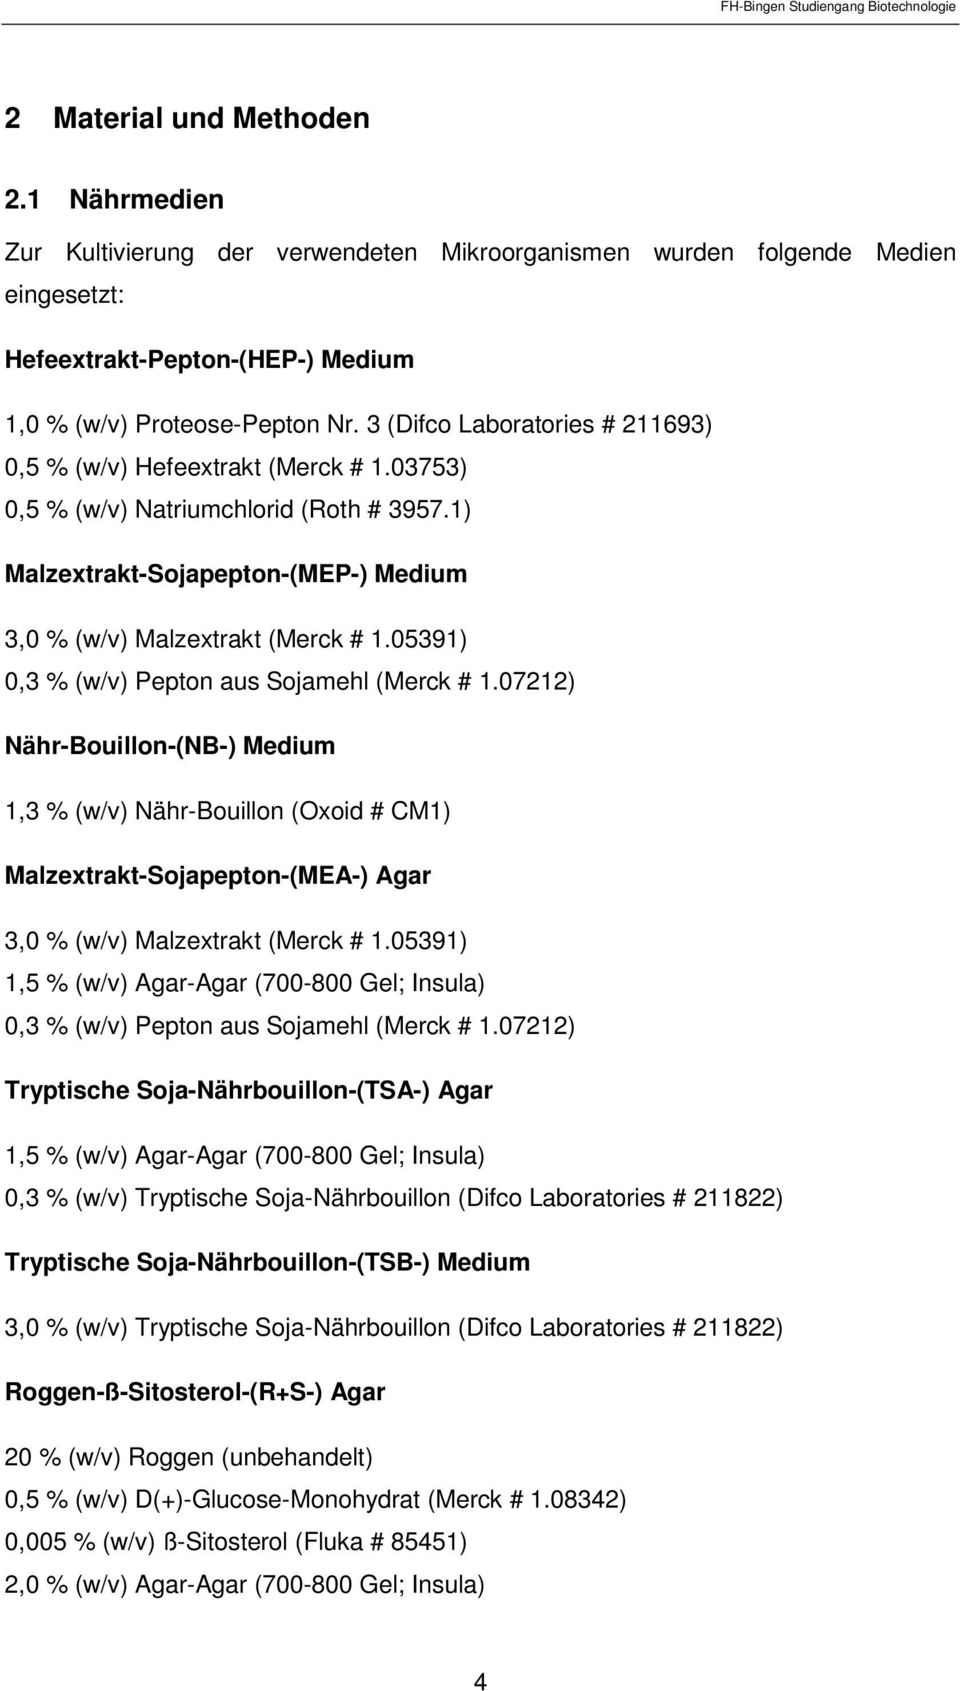 3 (Difco Lortories # 211693) 0,5 % (w/v) Hefeextrkt (Merck # 1.03753) 0,5 % (w/v) Ntriumchlorid (Roth # 3957.1) Mlzextrkt-Sojpepton-(MEP-) Medium 3,0 % (w/v) Mlzextrkt (Merck # 1.